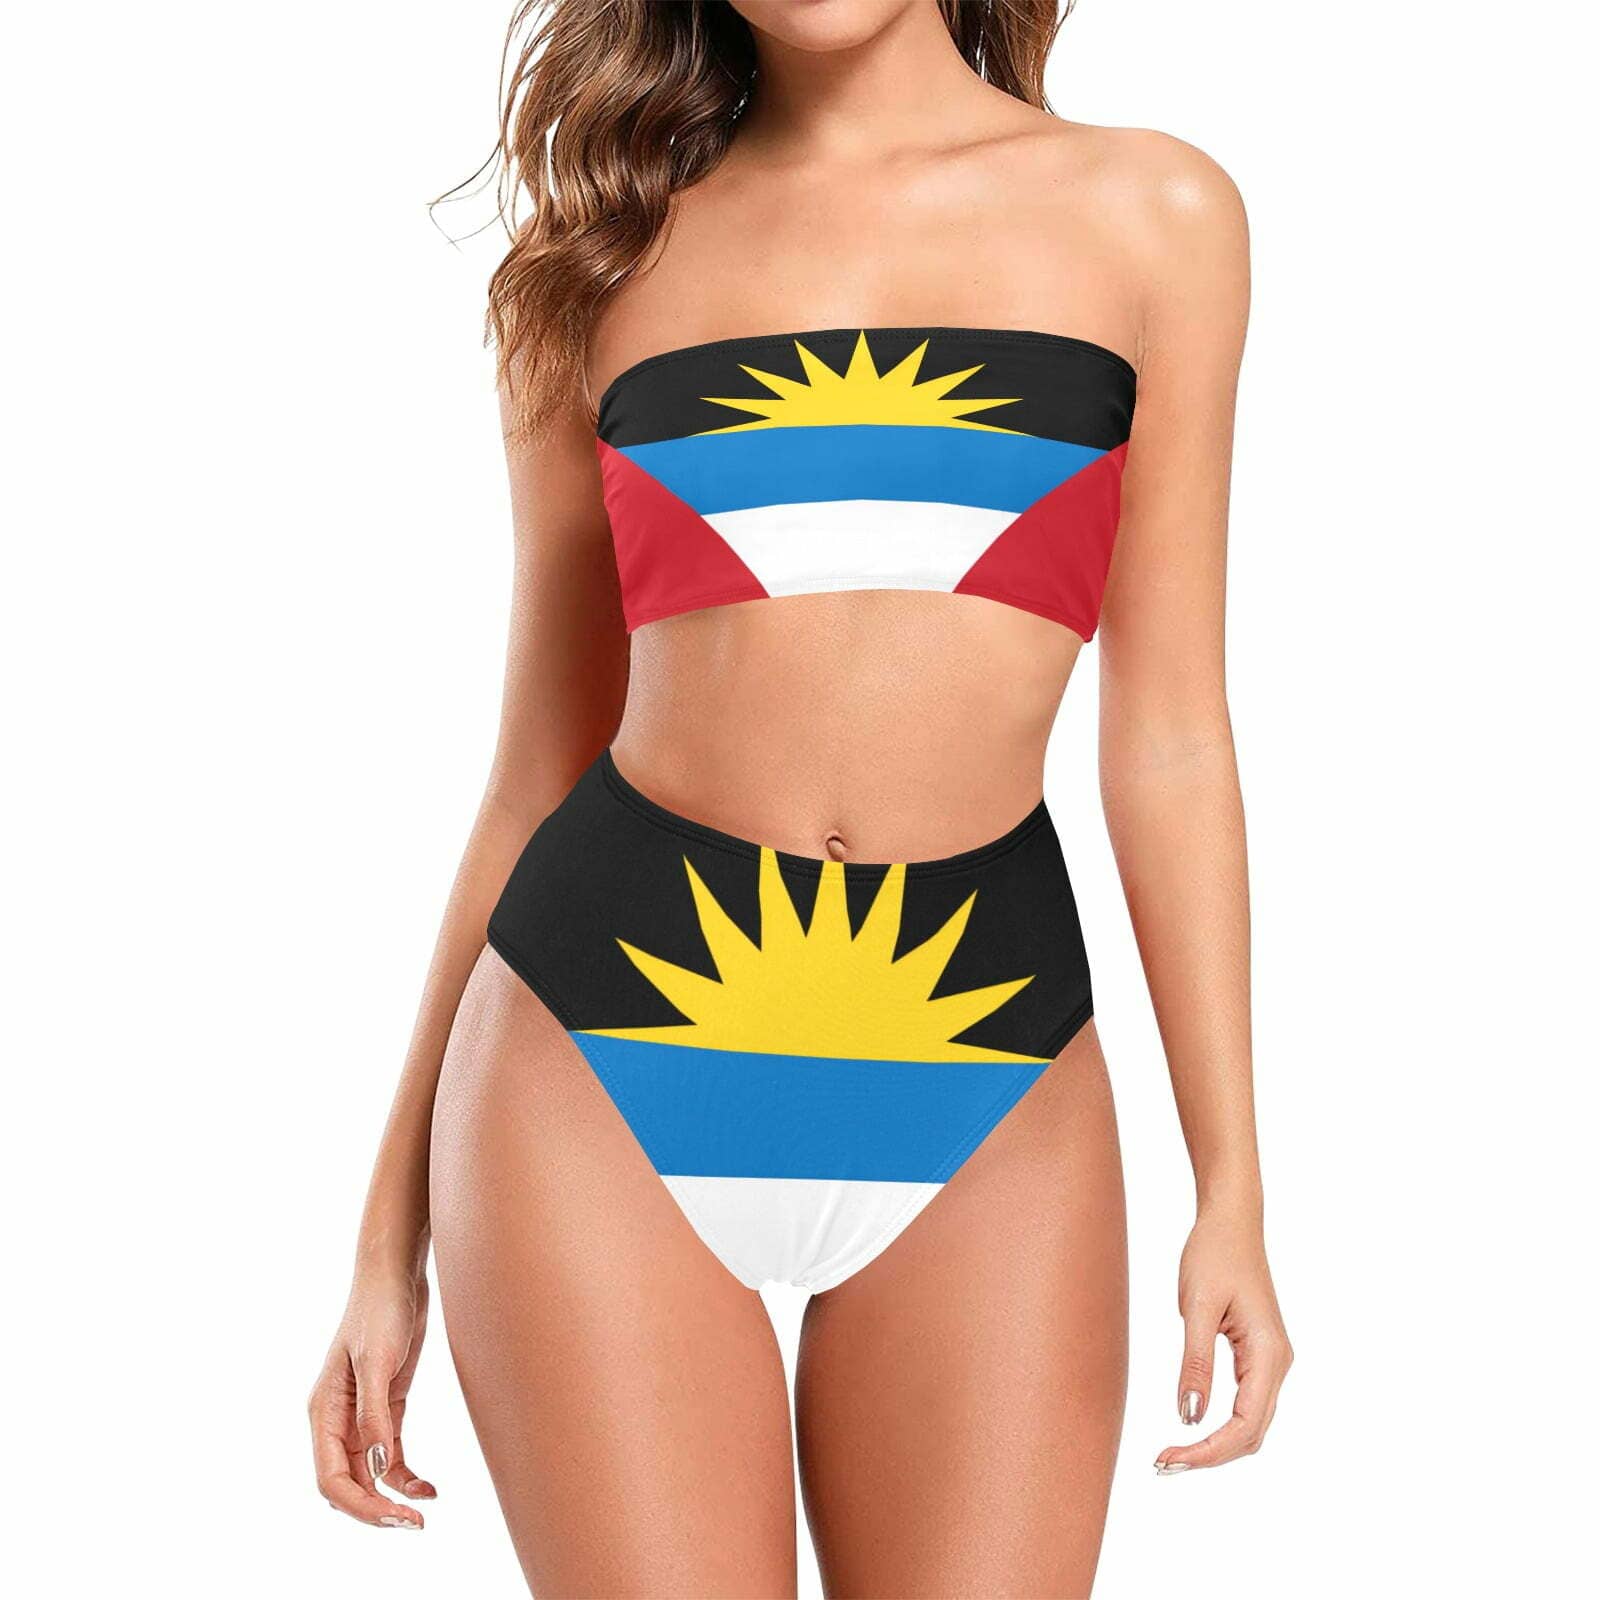 Antigua and Barbuda Flag Chest Wrap Bikini Swimsuit